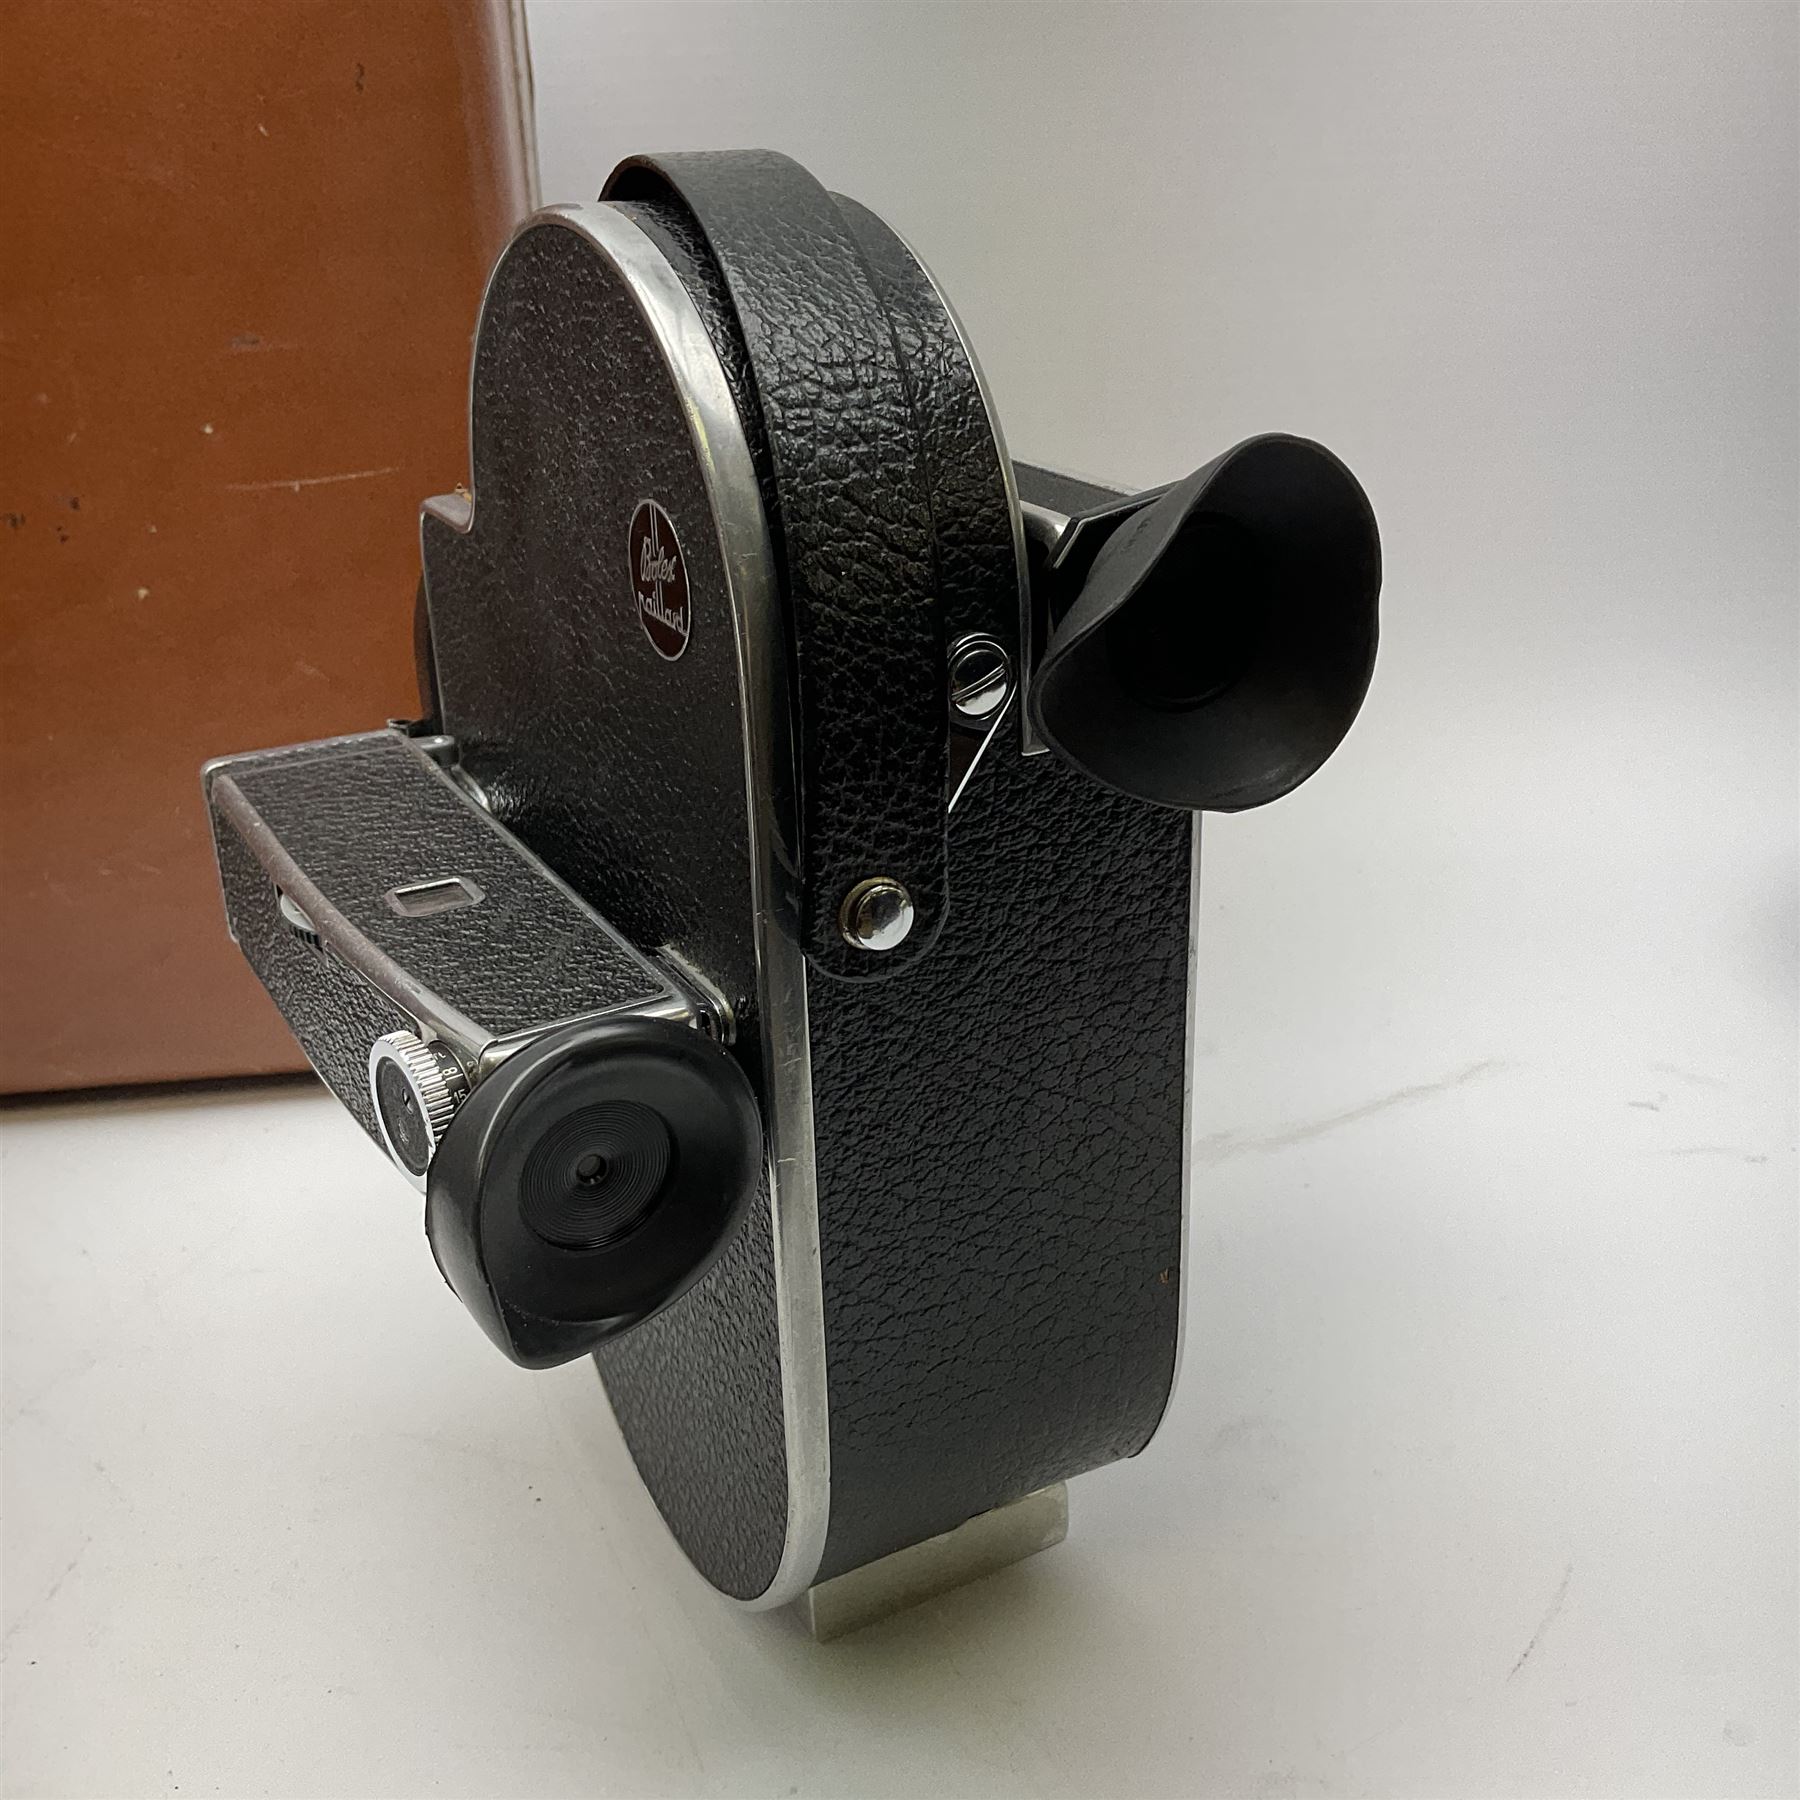 Paillard Bolex H16 Reflex 16mm cine camera with handgrip and turret for interchangeable lenses - Image 6 of 15